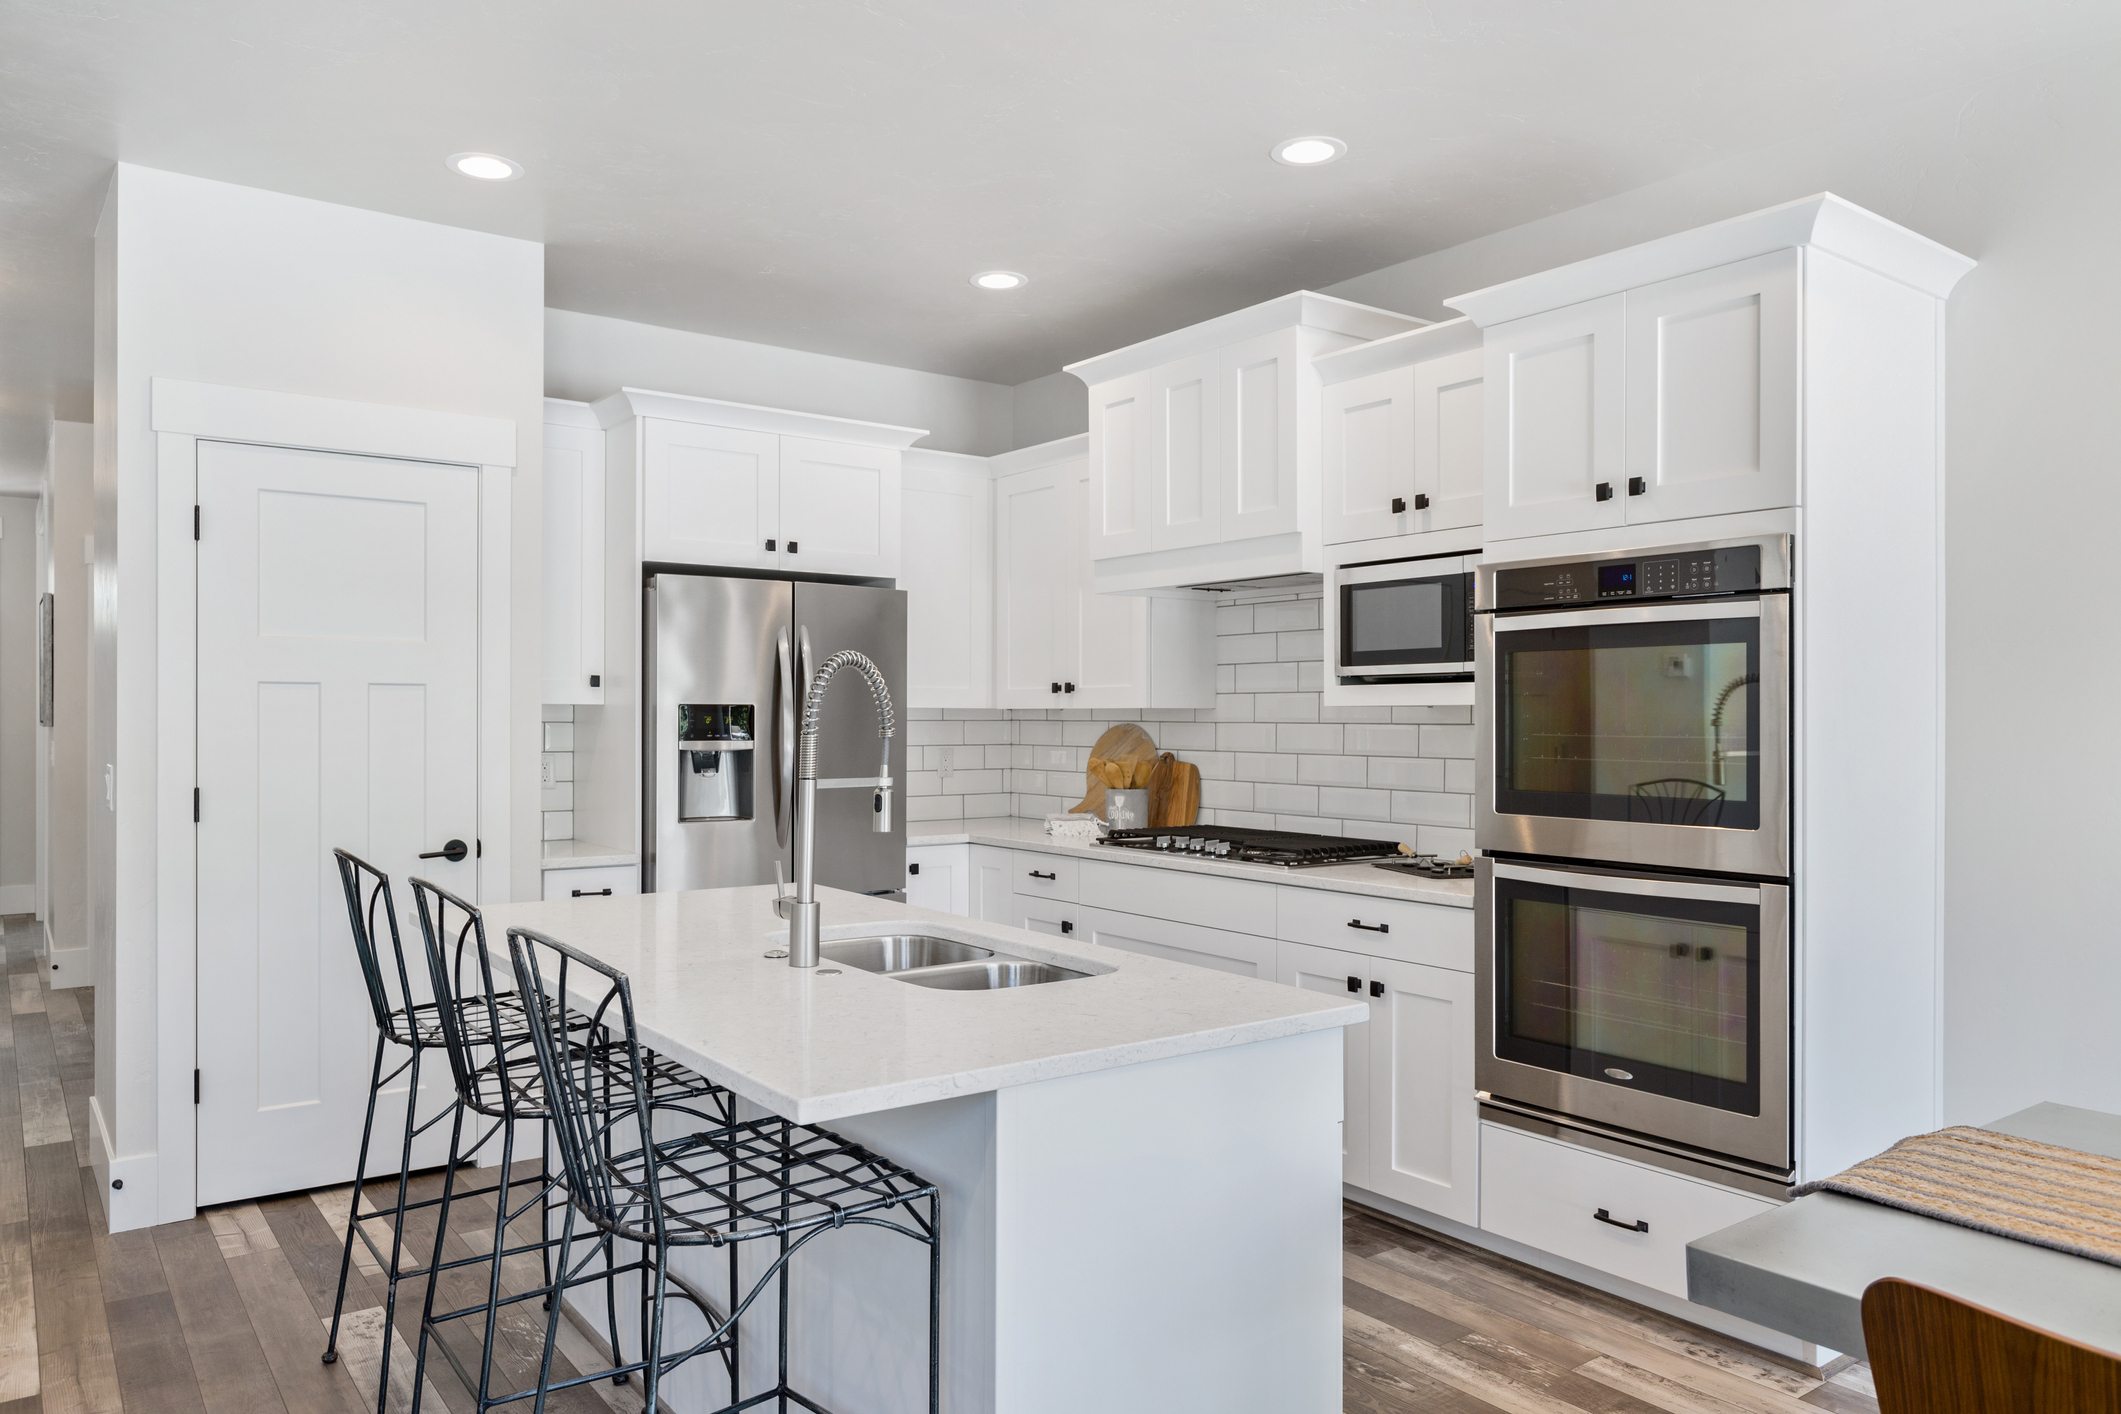 granite countertops and cabints in a kitchen are white